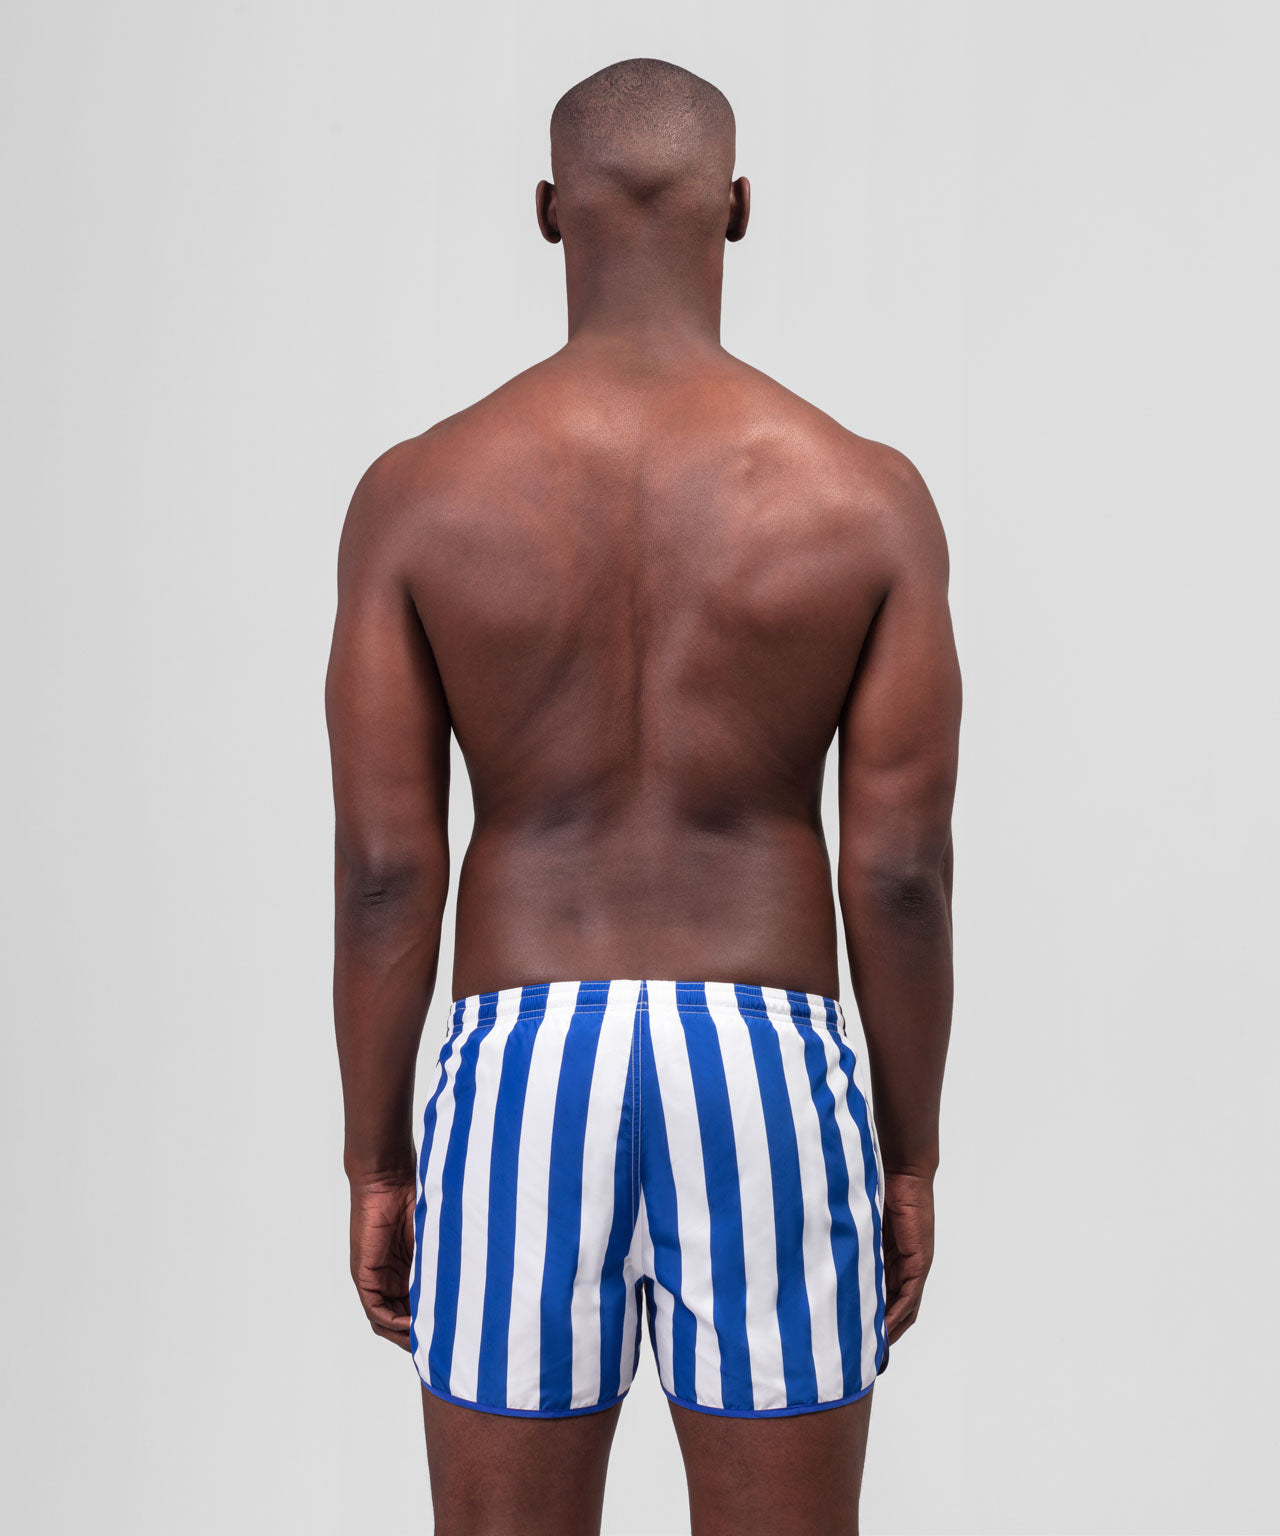 Marathon Swim Shorts Vertical Wide Stripes: Greek Blue/White